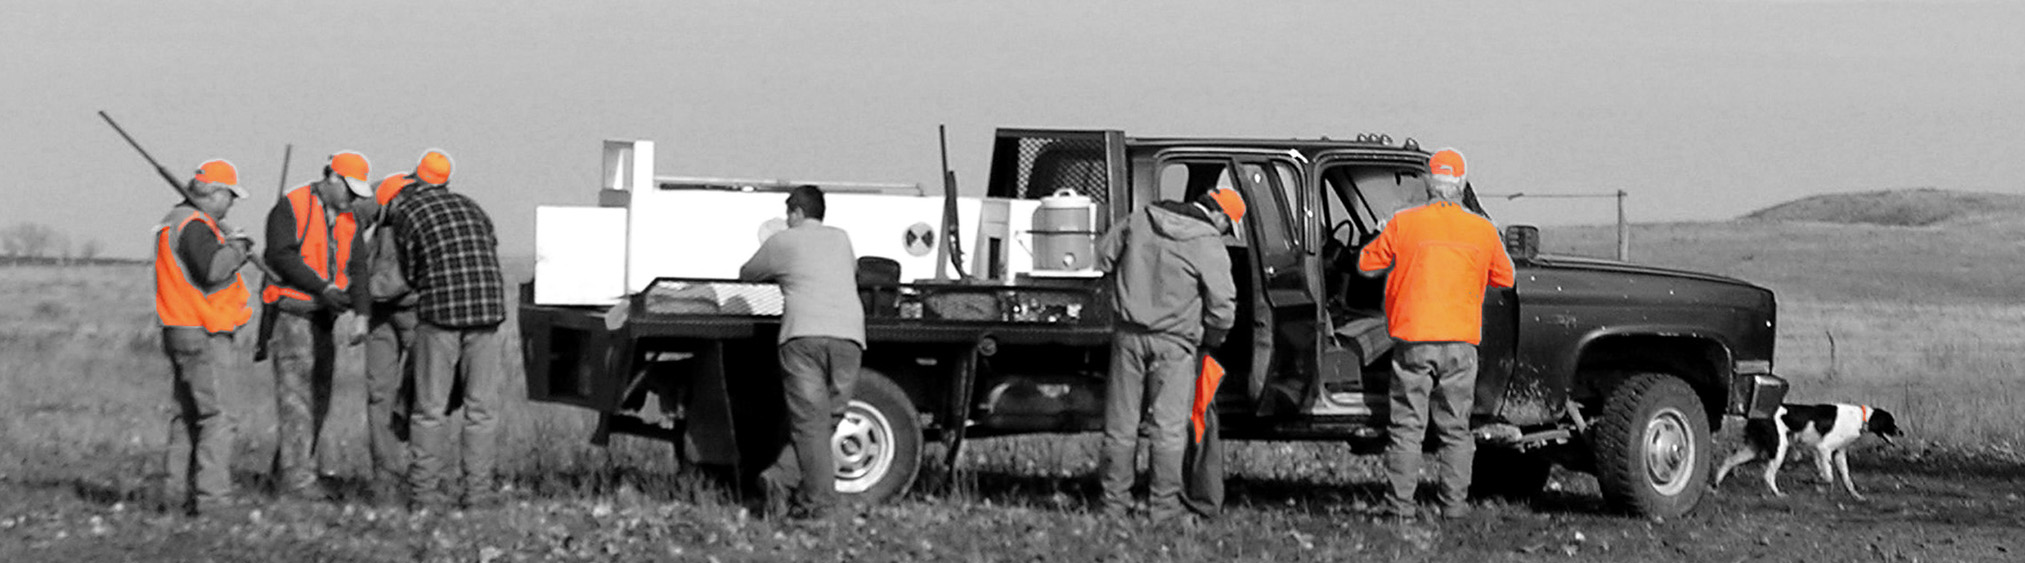 Ringneck Ranch Pheasant Hunting Truck